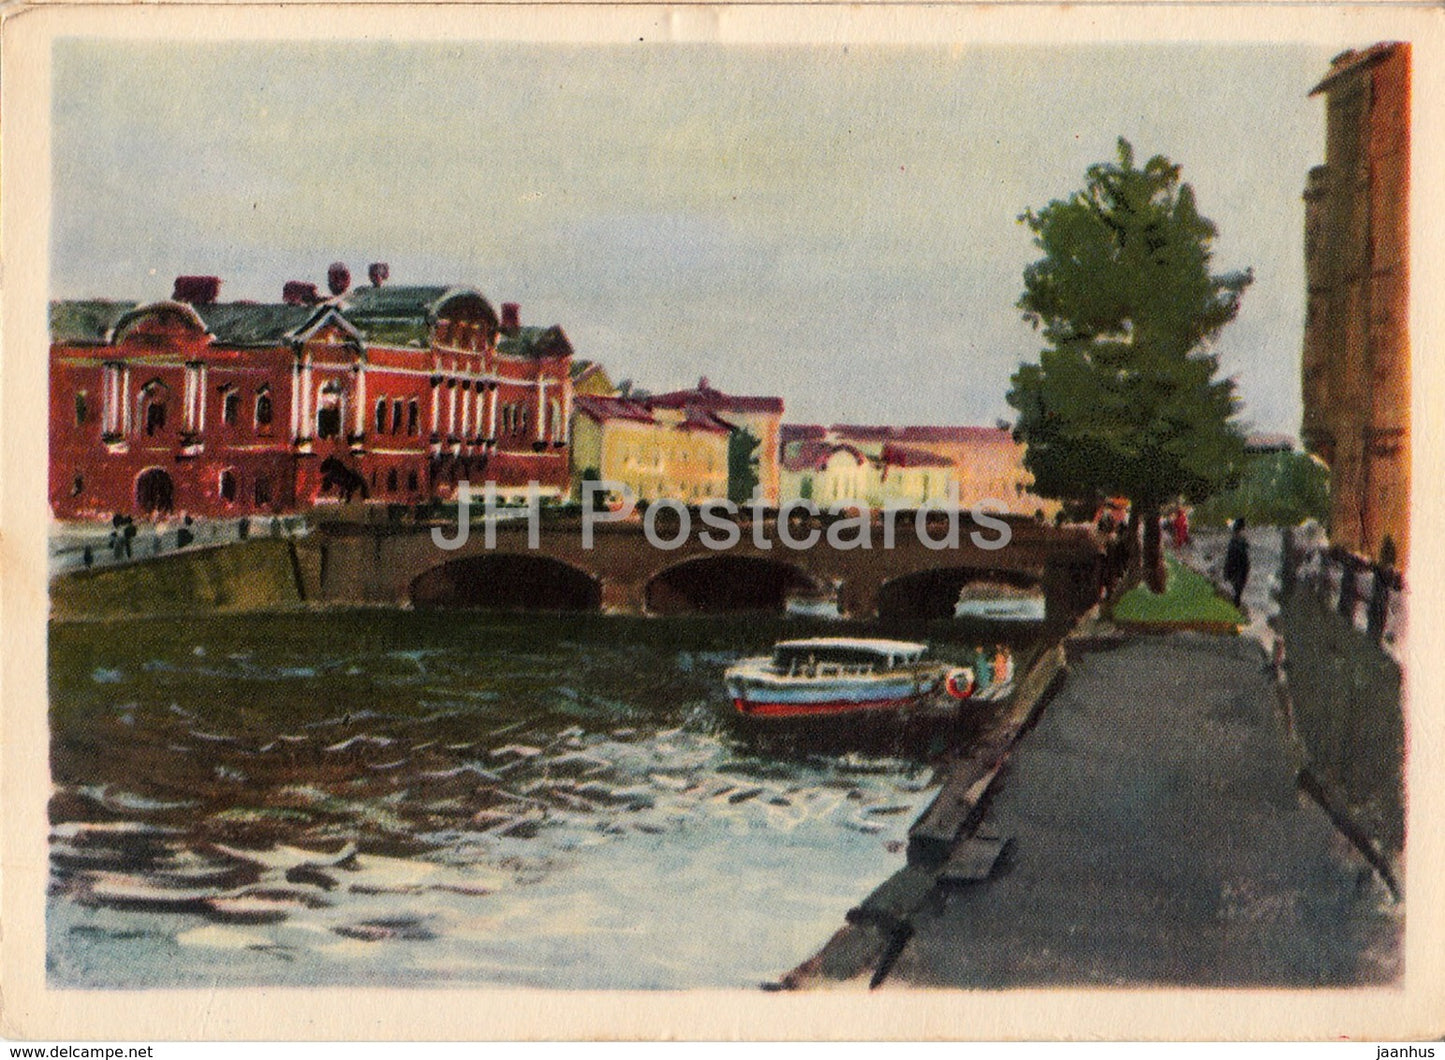 Leningrad - St. Petersburg - Fontanka at Anichkov Bridge - illustration by K. Dzhakov - 1961 - Russia USSR - unused - JH Postcards